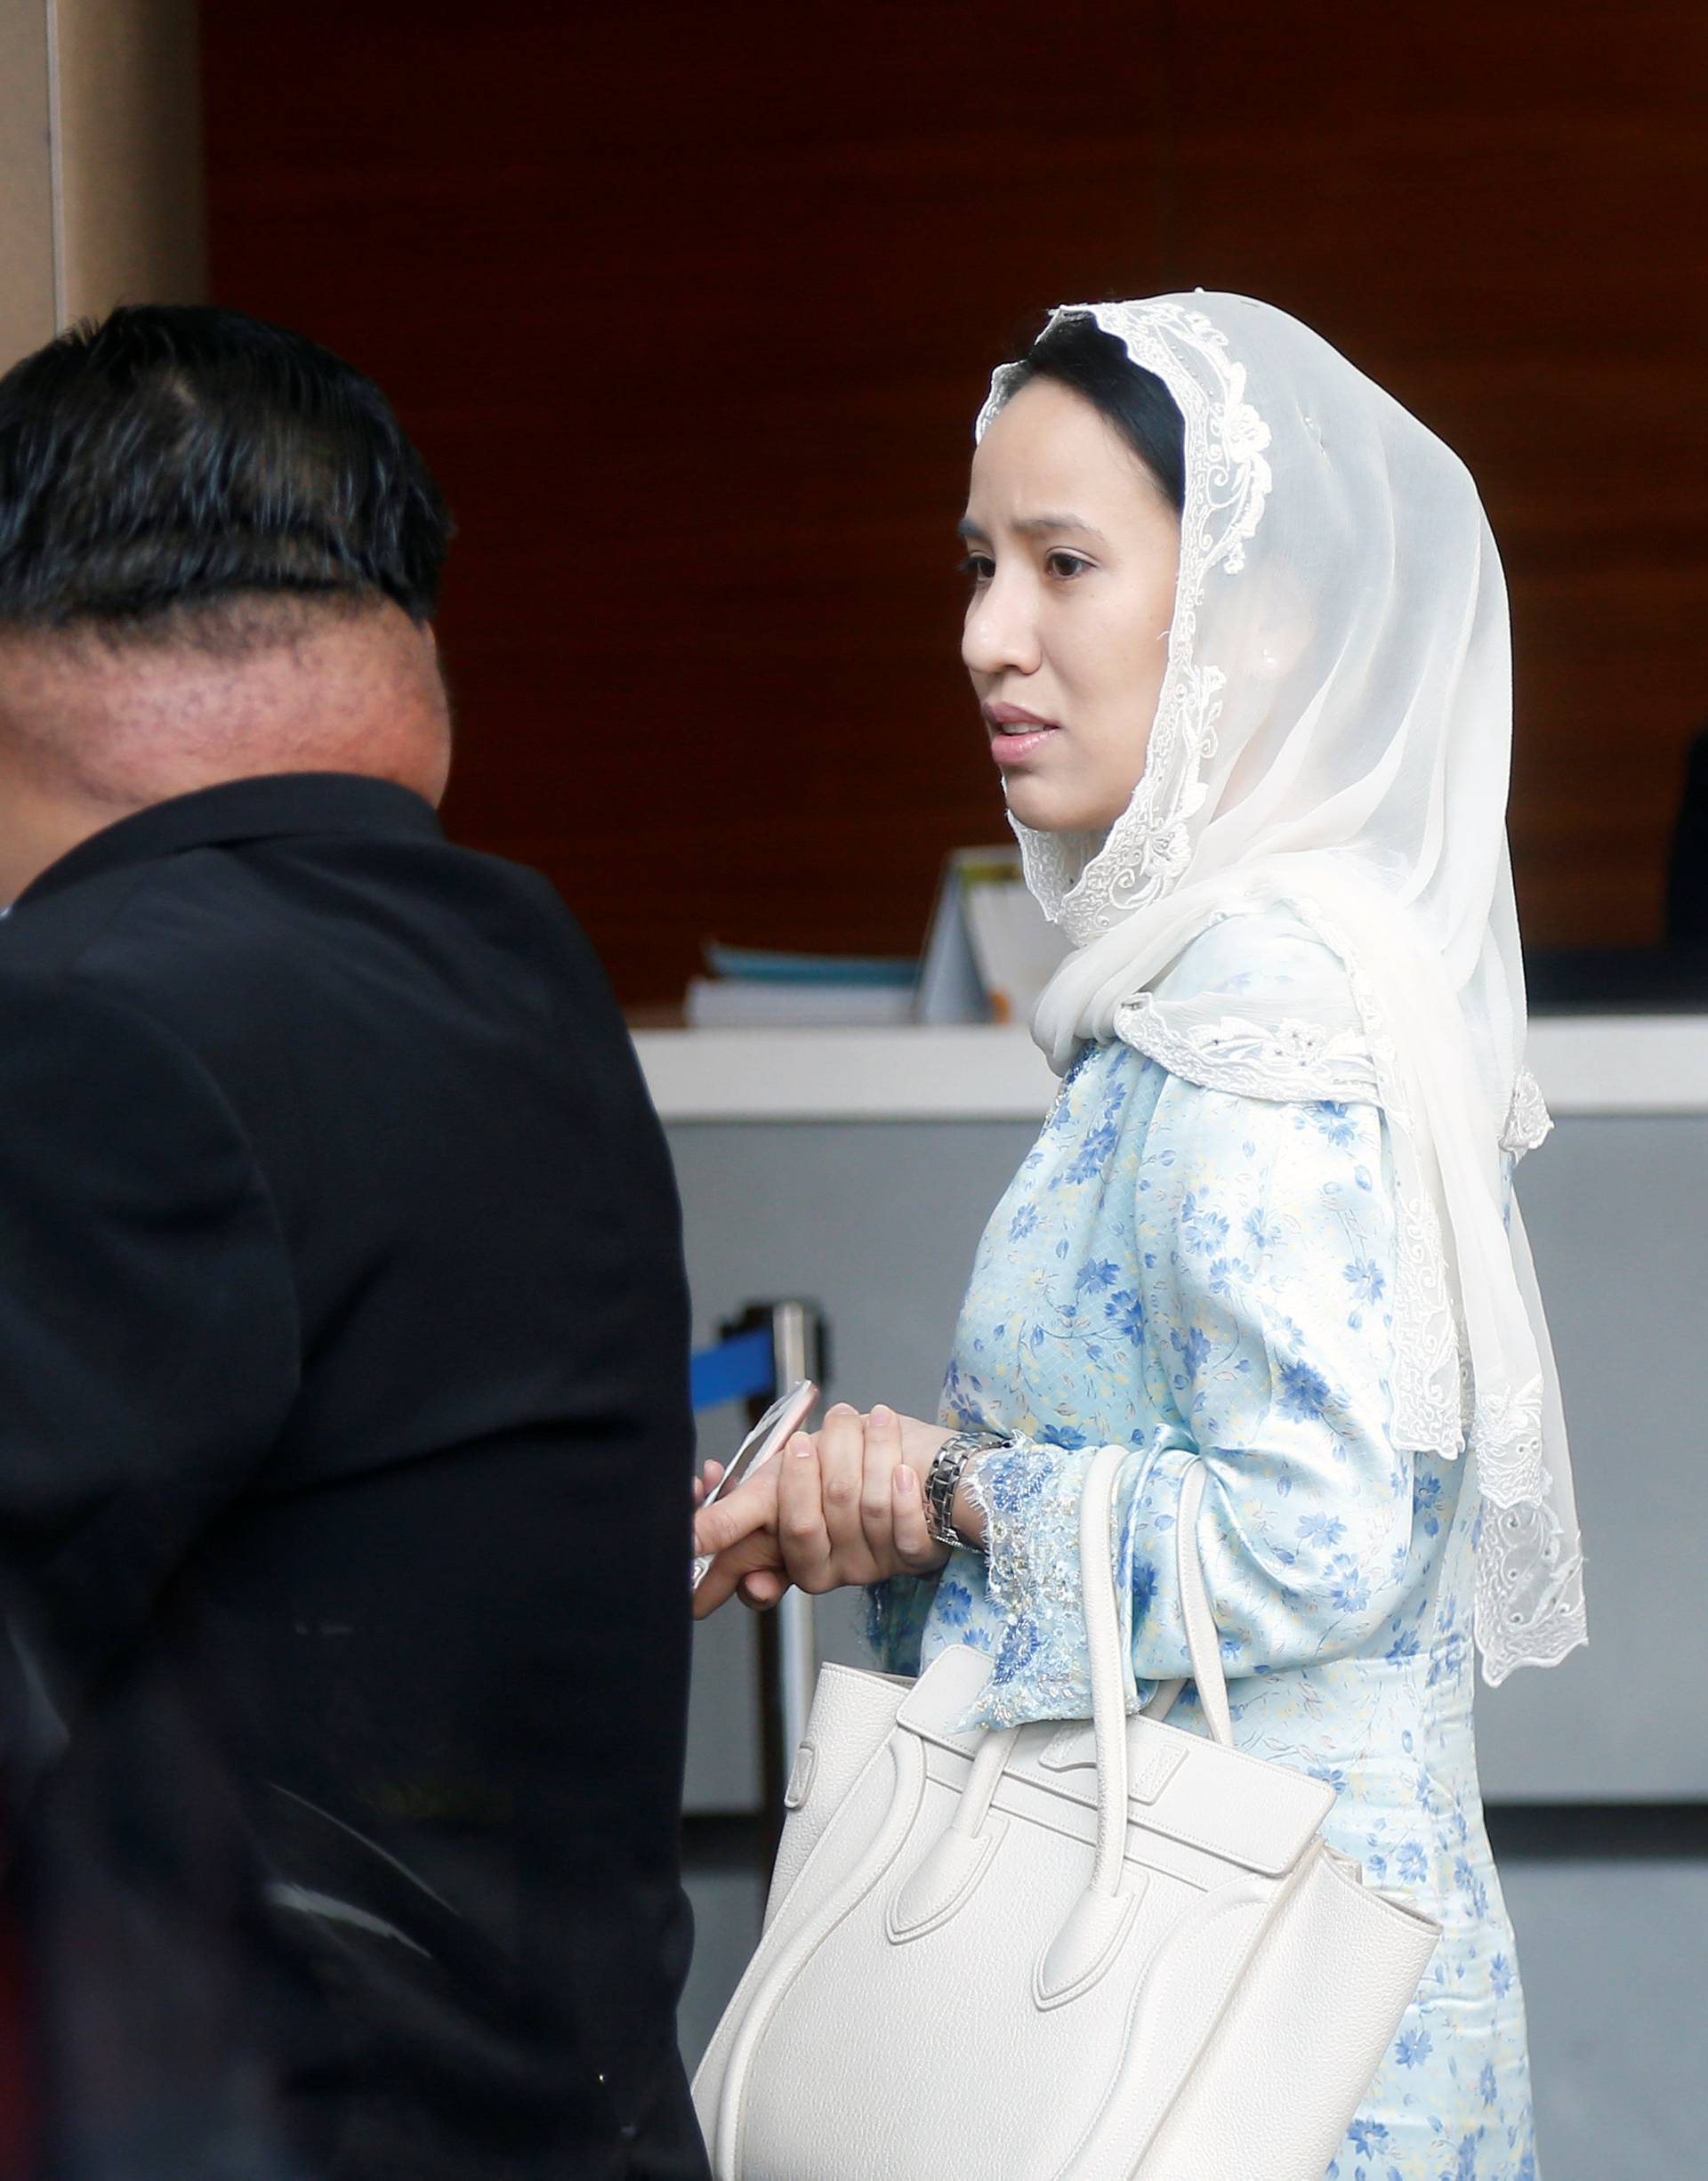 Nooryana Najwa Najib accompanies her mother Rosmah, the wife of former Malaysian prime minister Najib, to the Malaysian Anti-Corruption Commission in Putrajaya